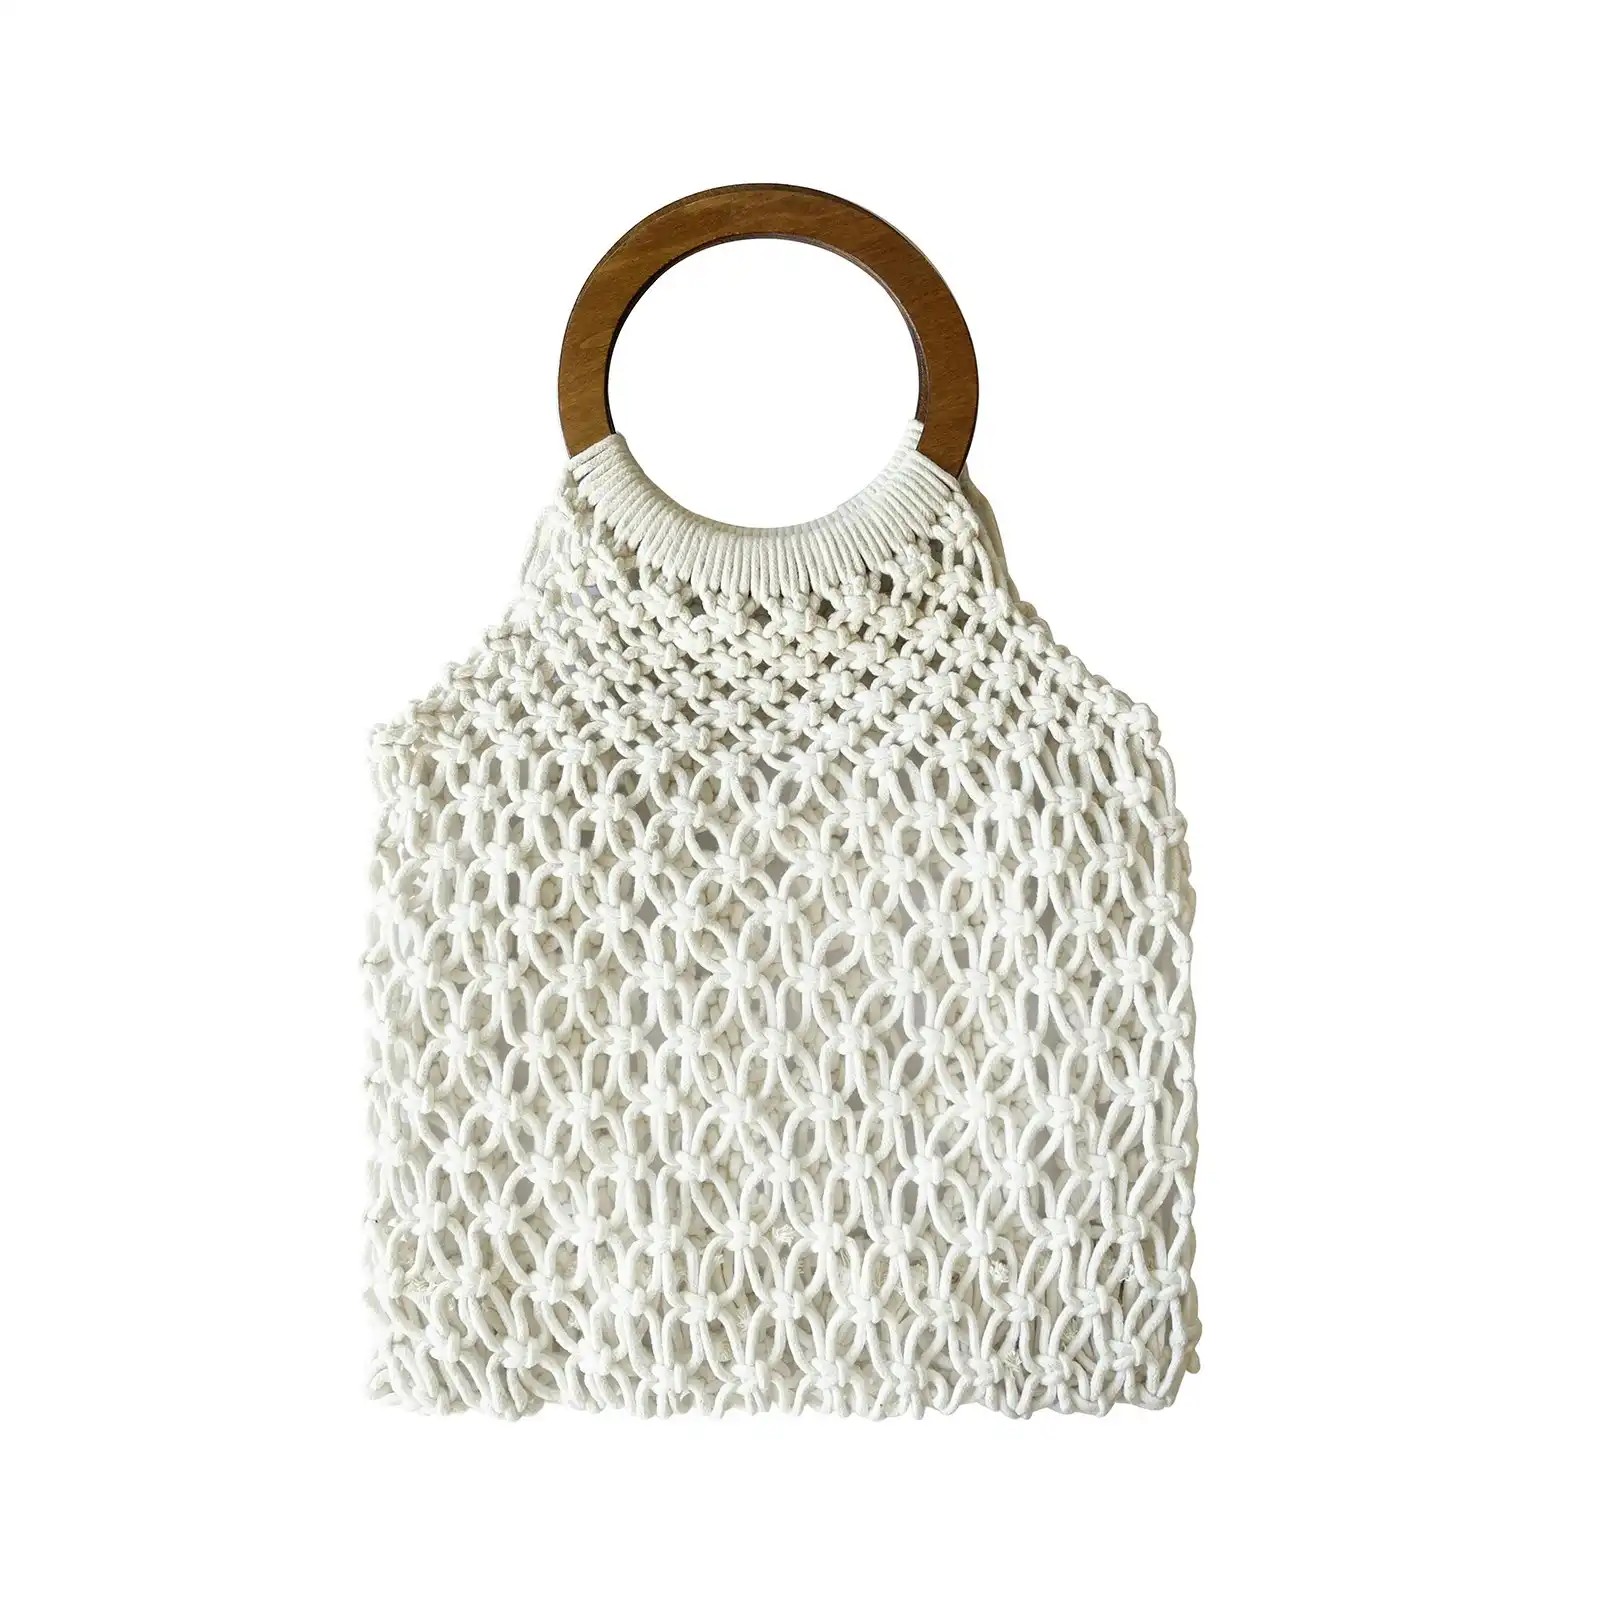 Culturesse Elowen Natural Woven 43.5cm Netting Bag Women's Fashion Handbag White